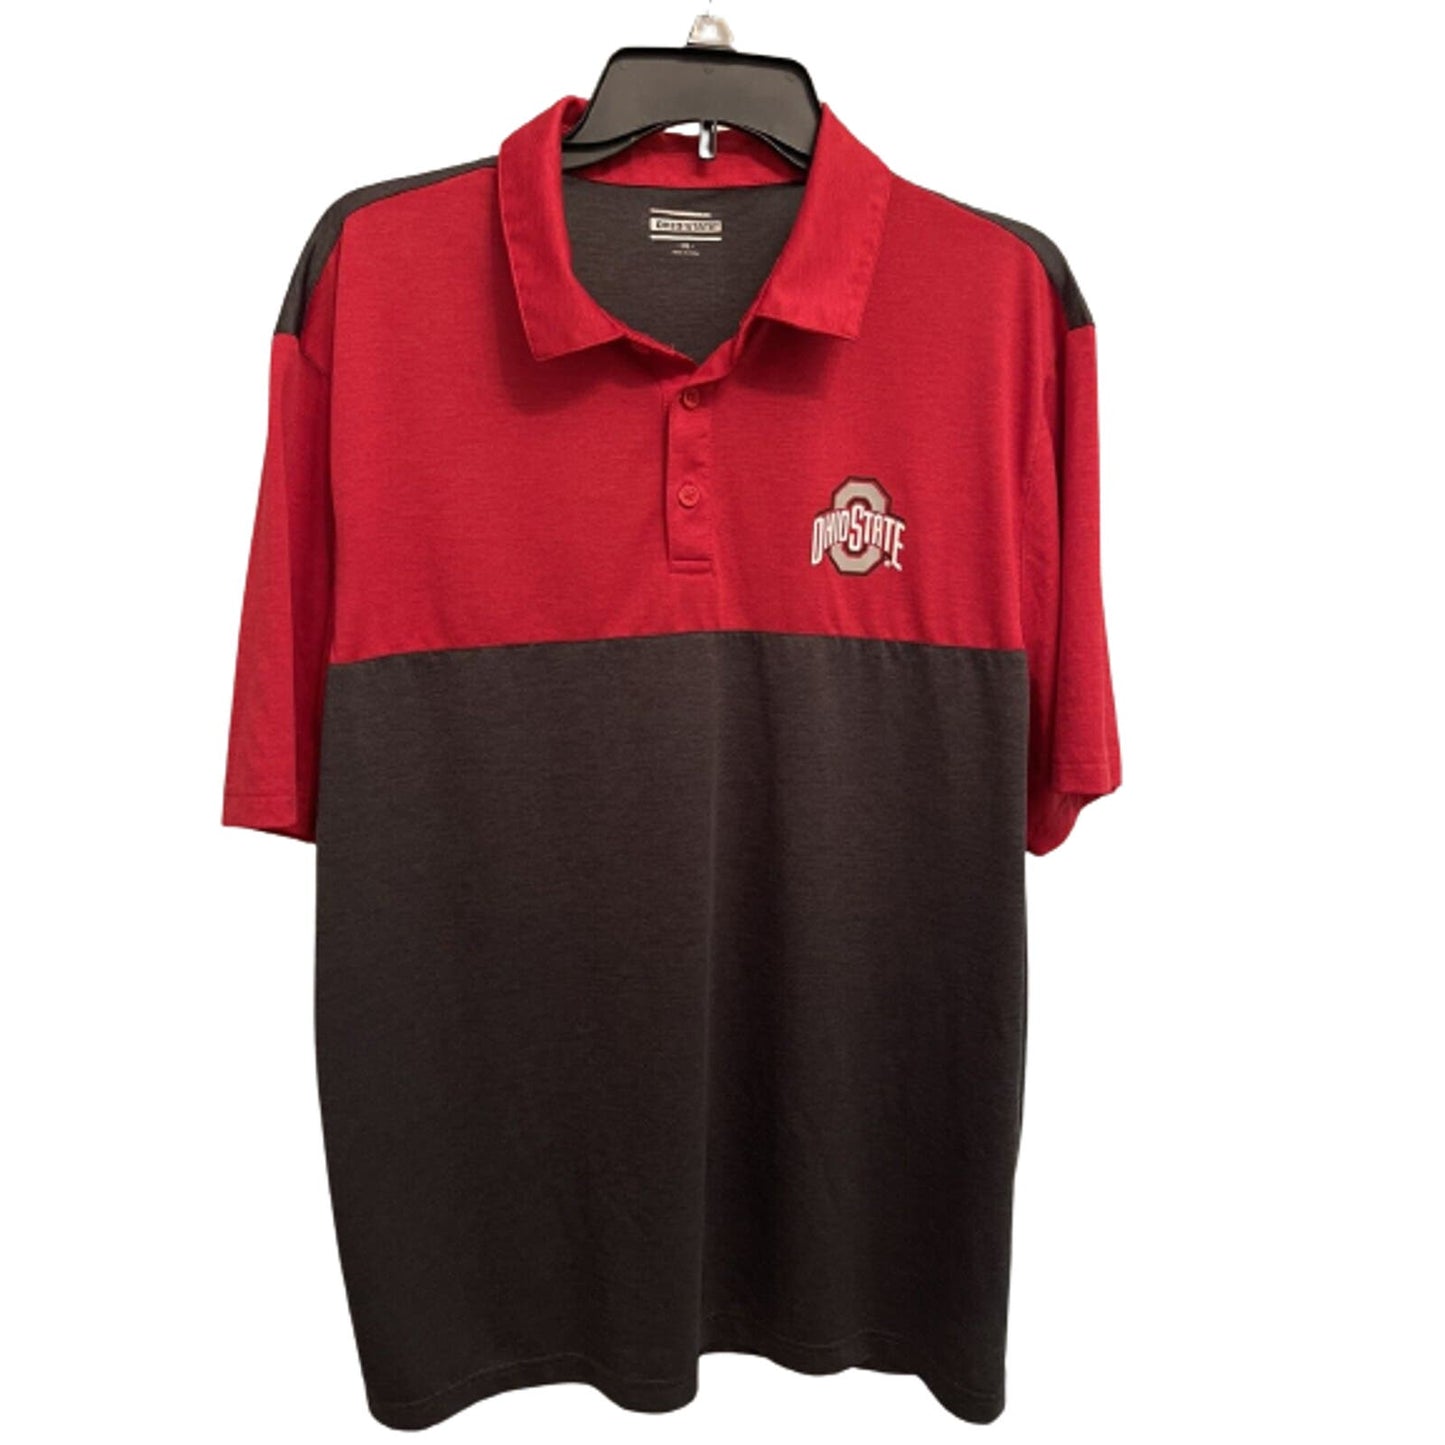 Men's Ohio State Polo Shirt - Size XL - Red & Gray - Collegiate